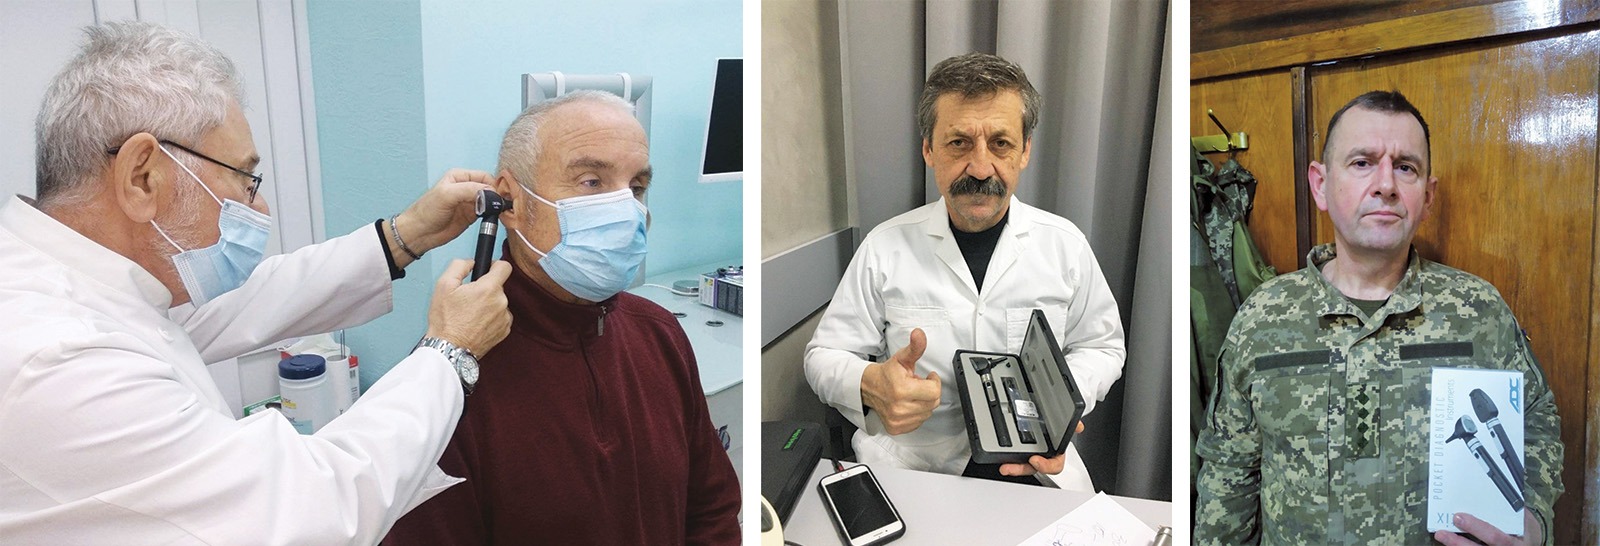 Donated otoscopes being used in Ukraine.